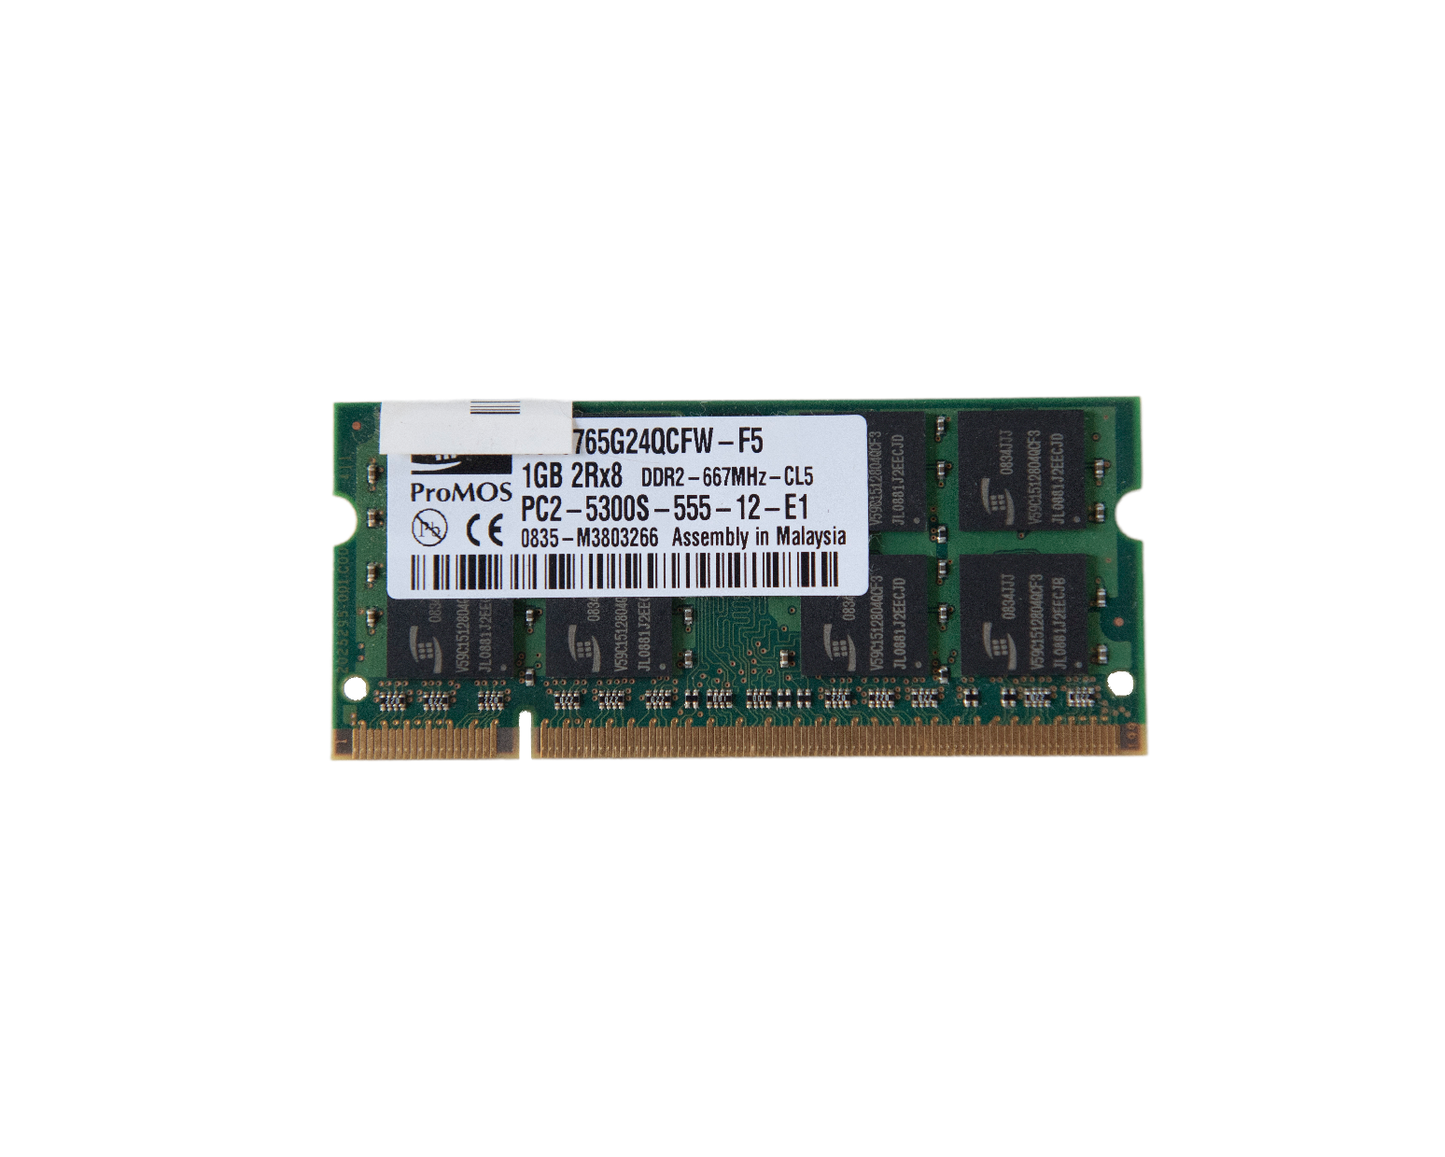 RAM SO-DIMM PROMOS 1GB DDR2 PC2-5300S-555-12-E1 V916765G24QCFW